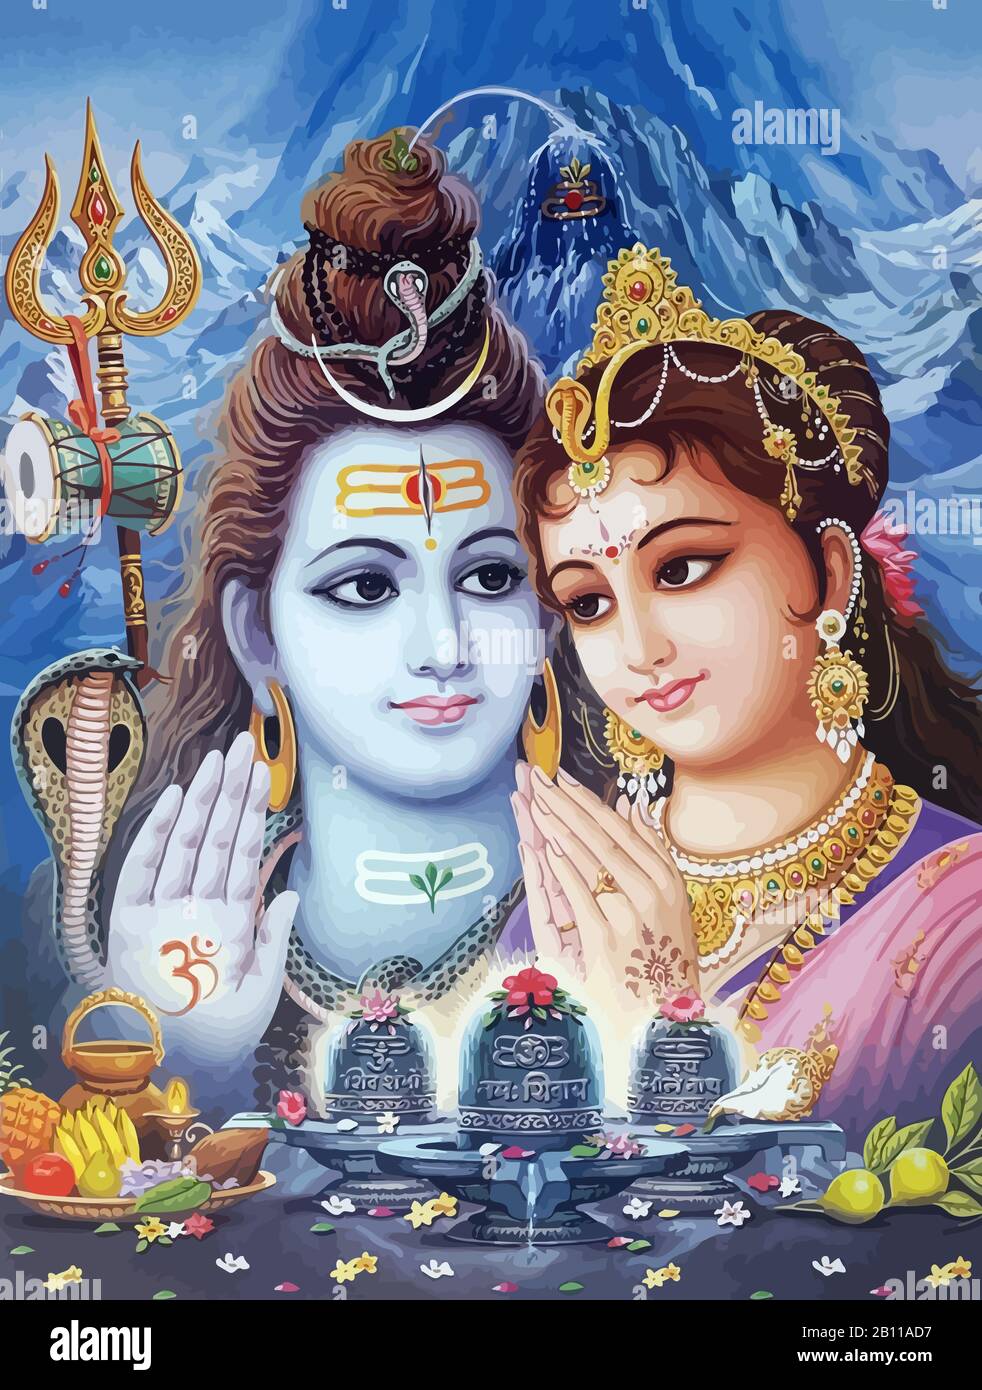 hinduism lord shiva spiritual illustration Lakshmi Stock Photo - Alamy